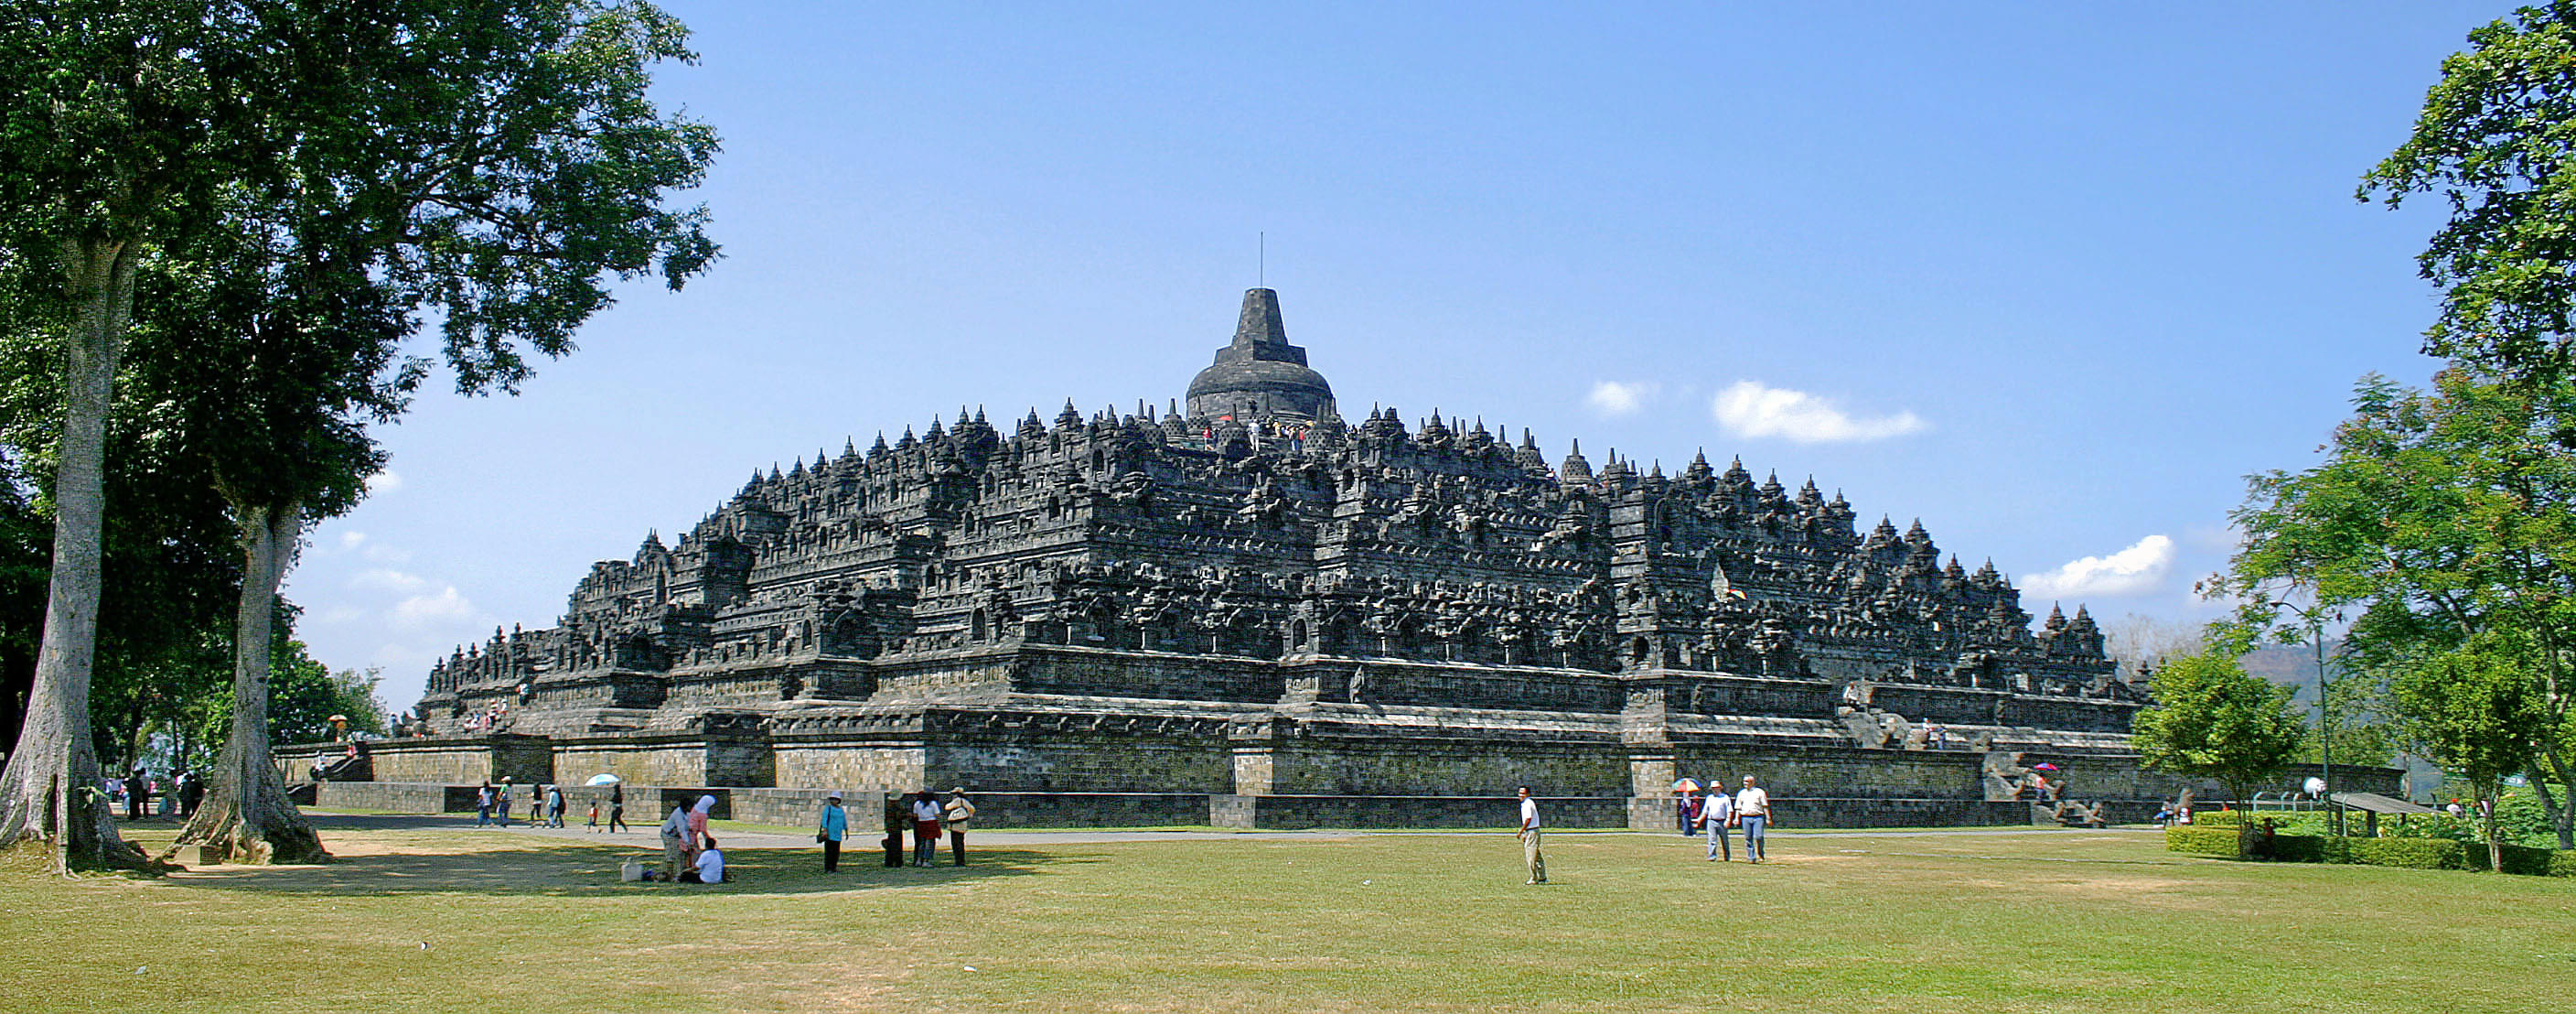 Borobudur Temple Overview